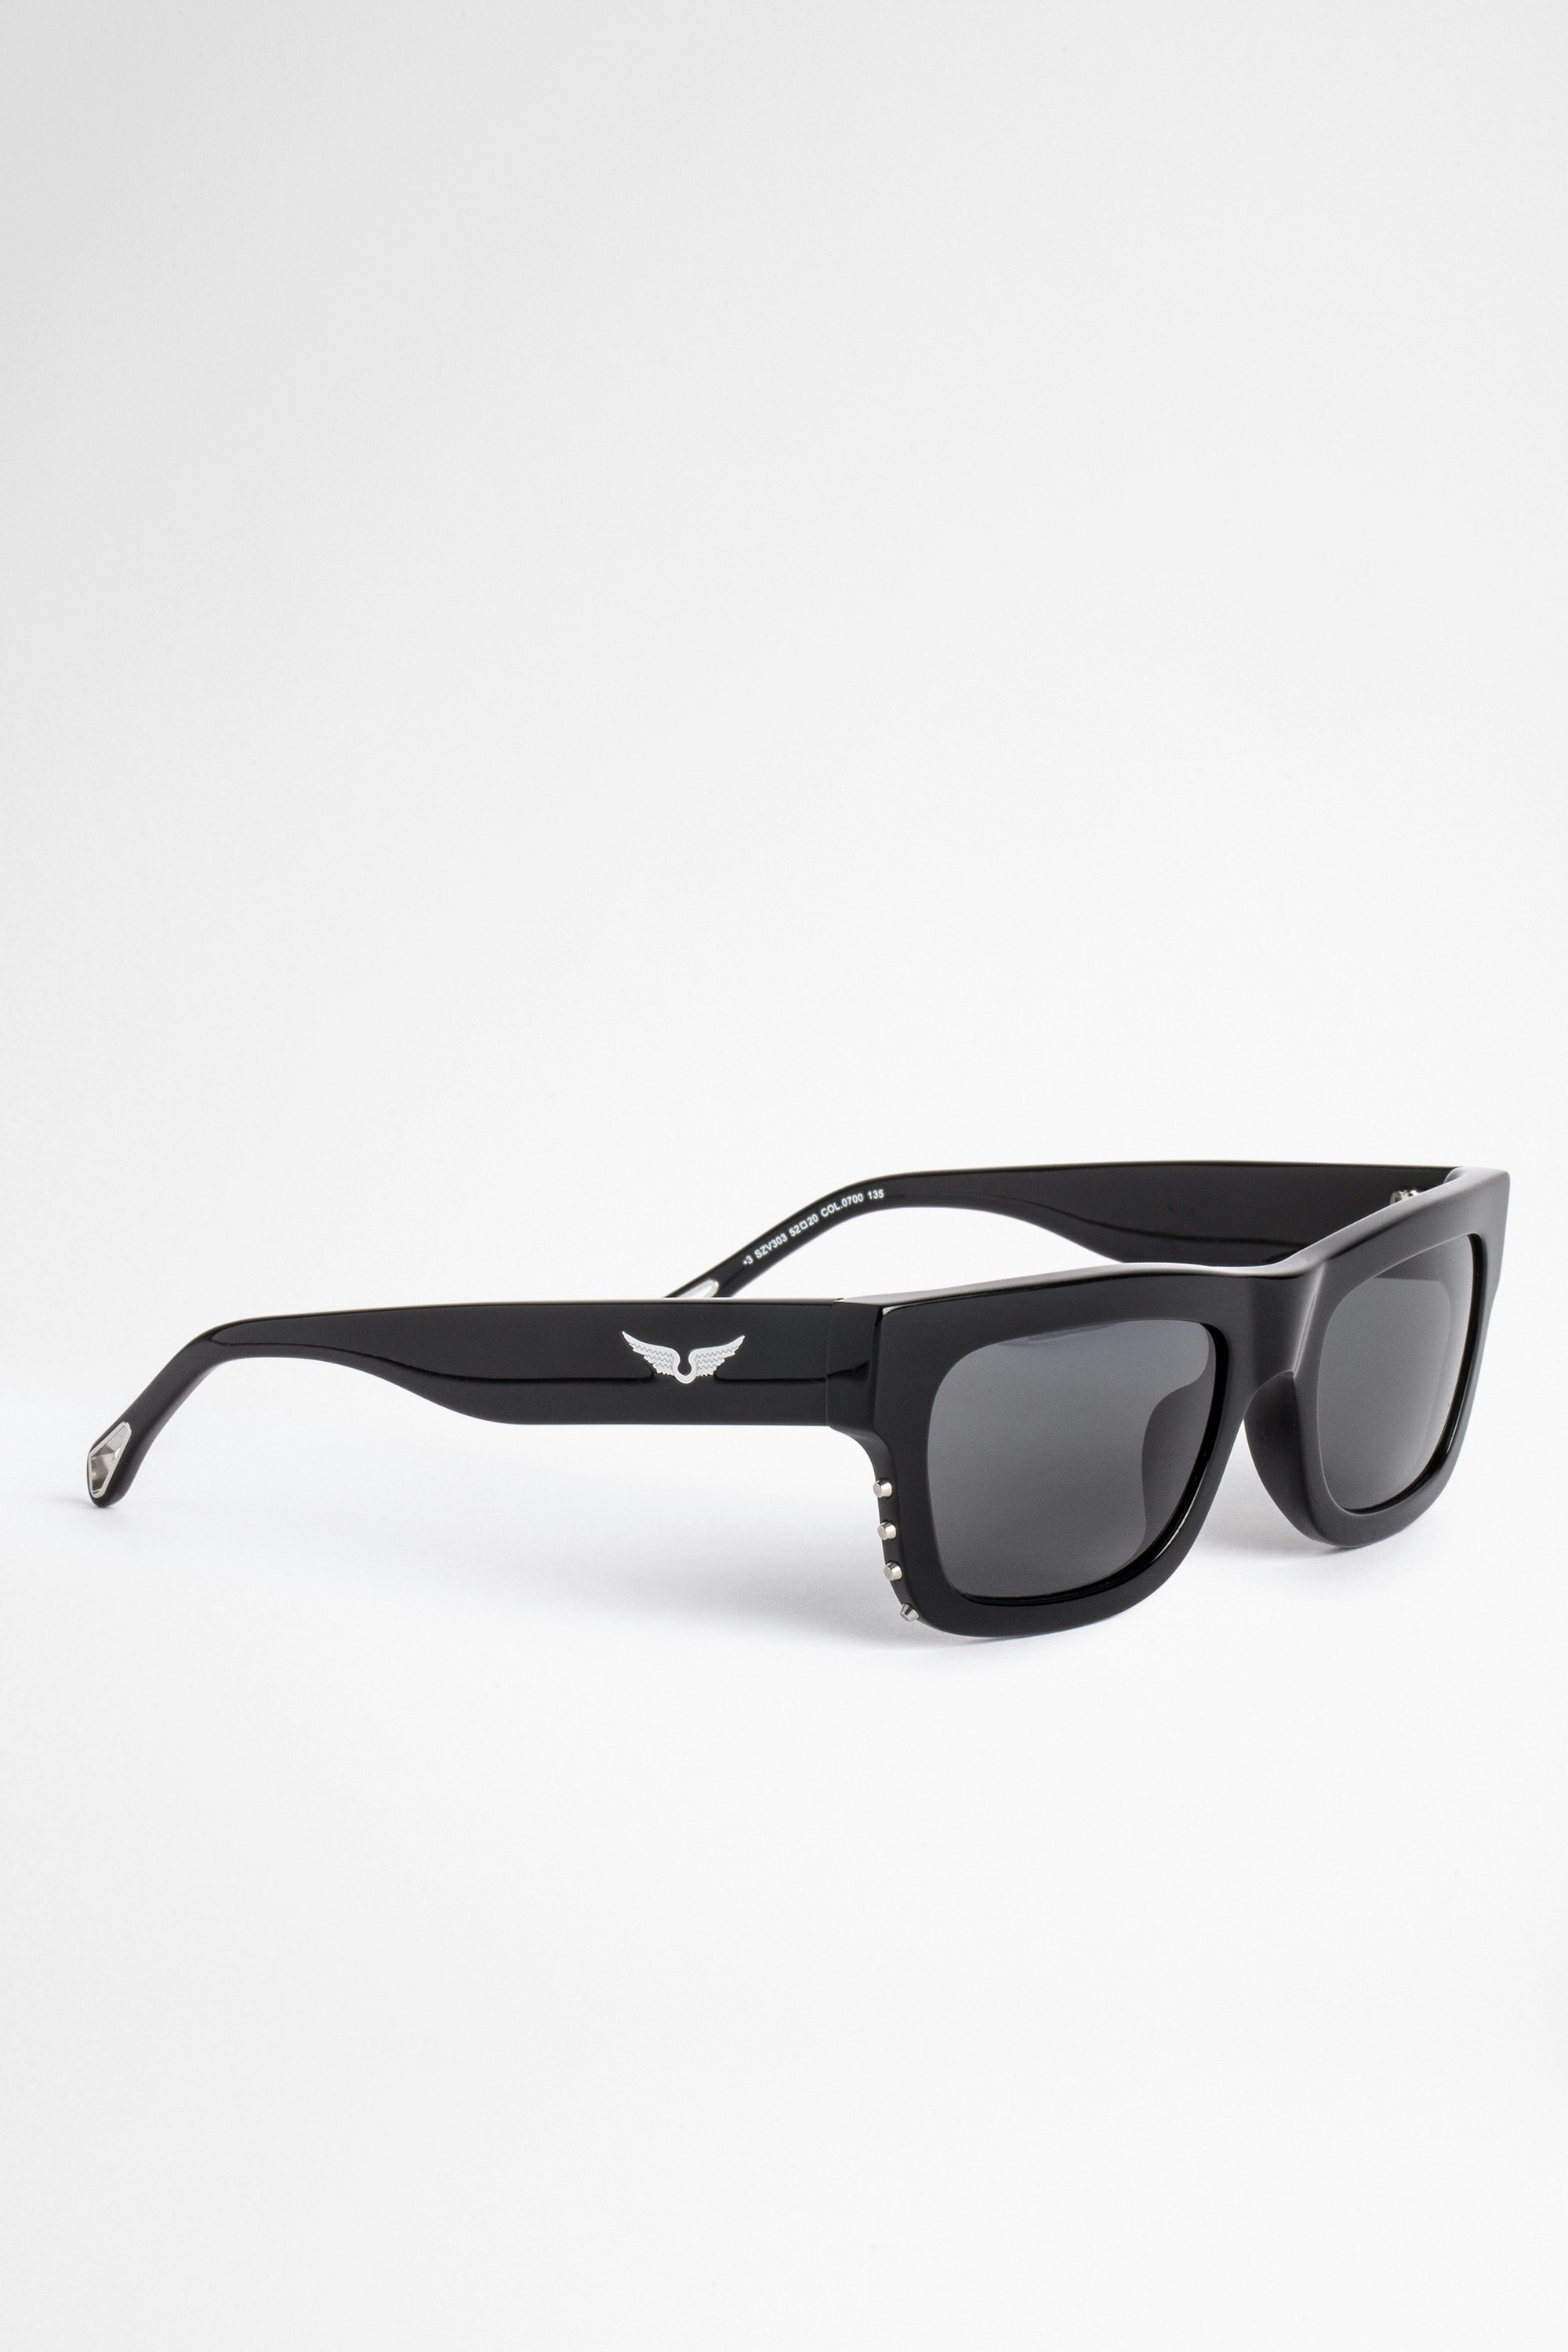 Brille Shiny Unisex sunglasses Zadig&Volatire black acetate decorated with small metal studs.